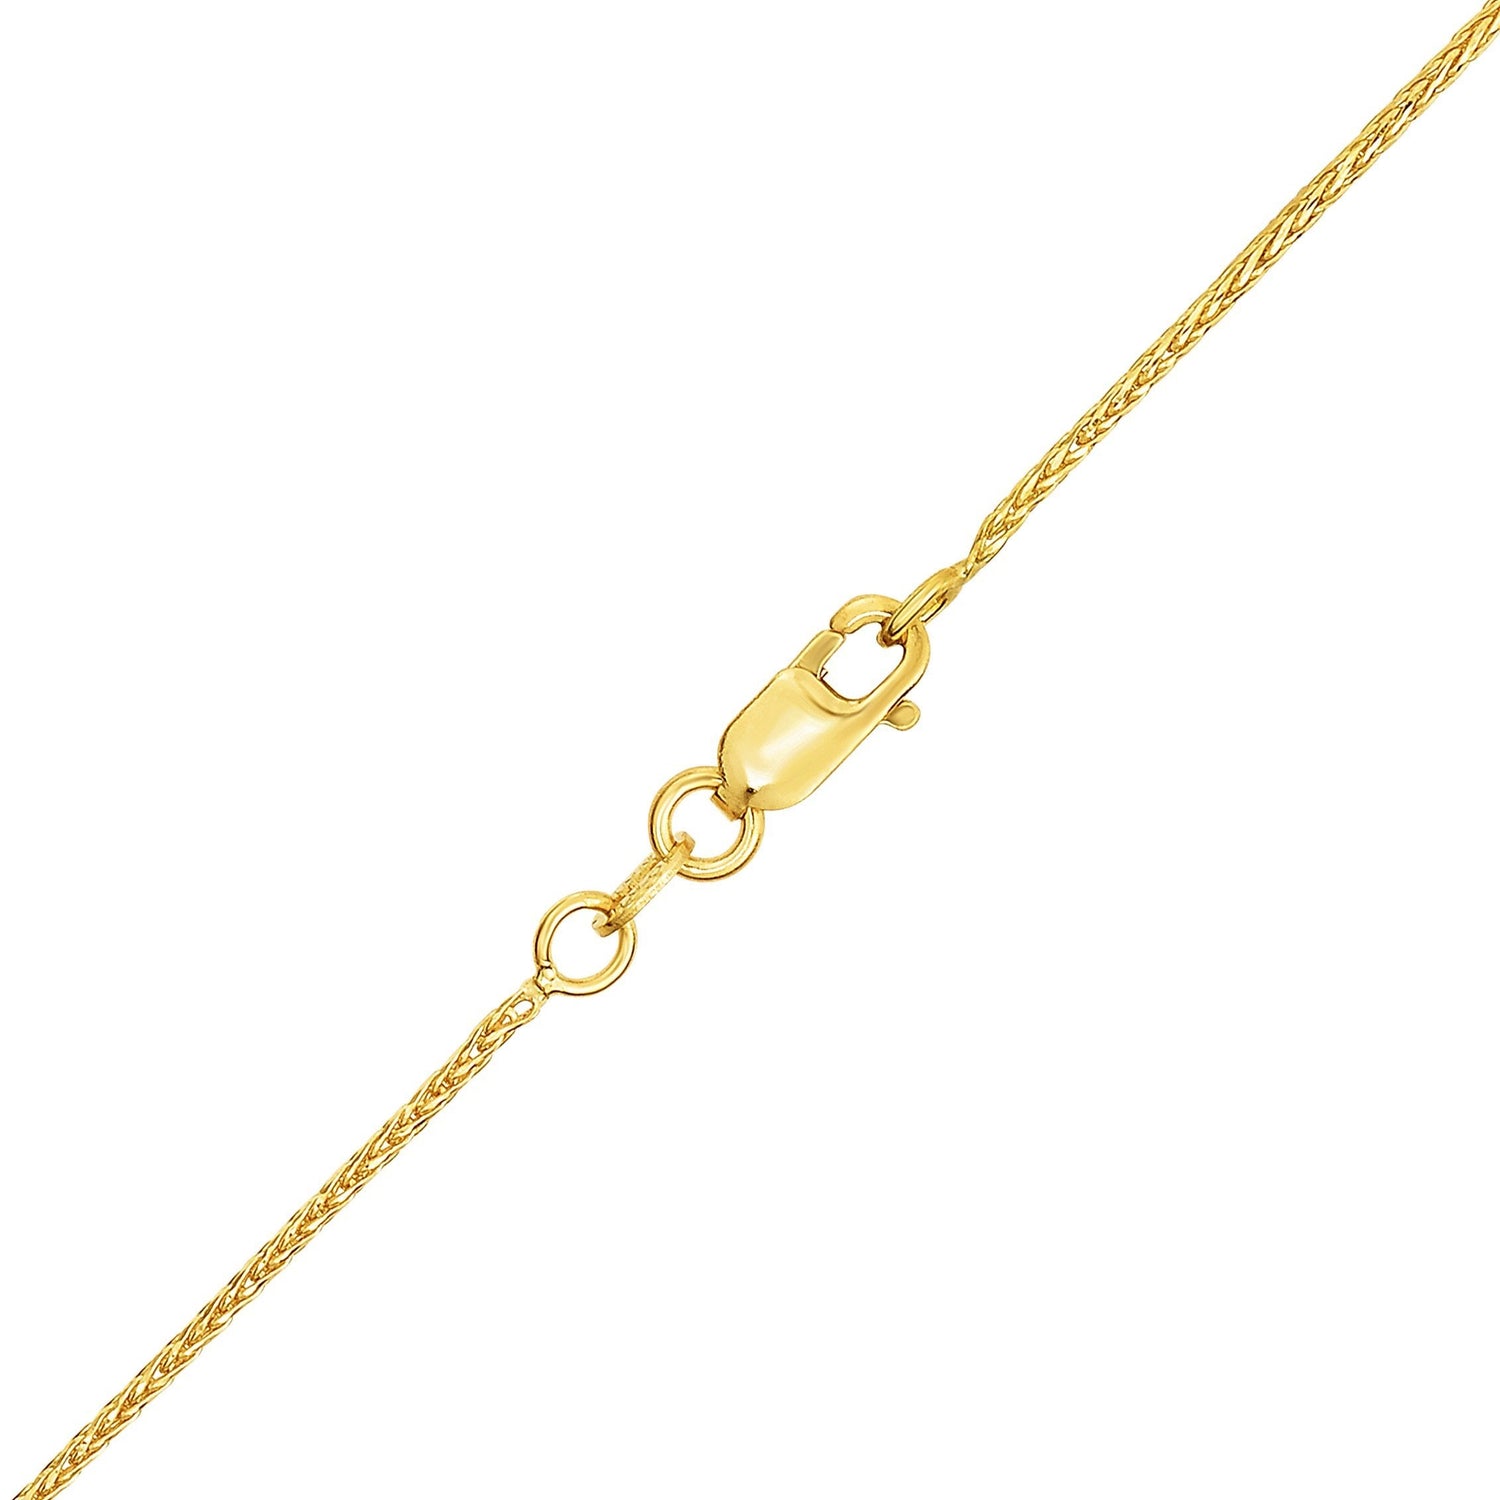 10K Fine Gold Wheat Chain Necklace, 24 Inch